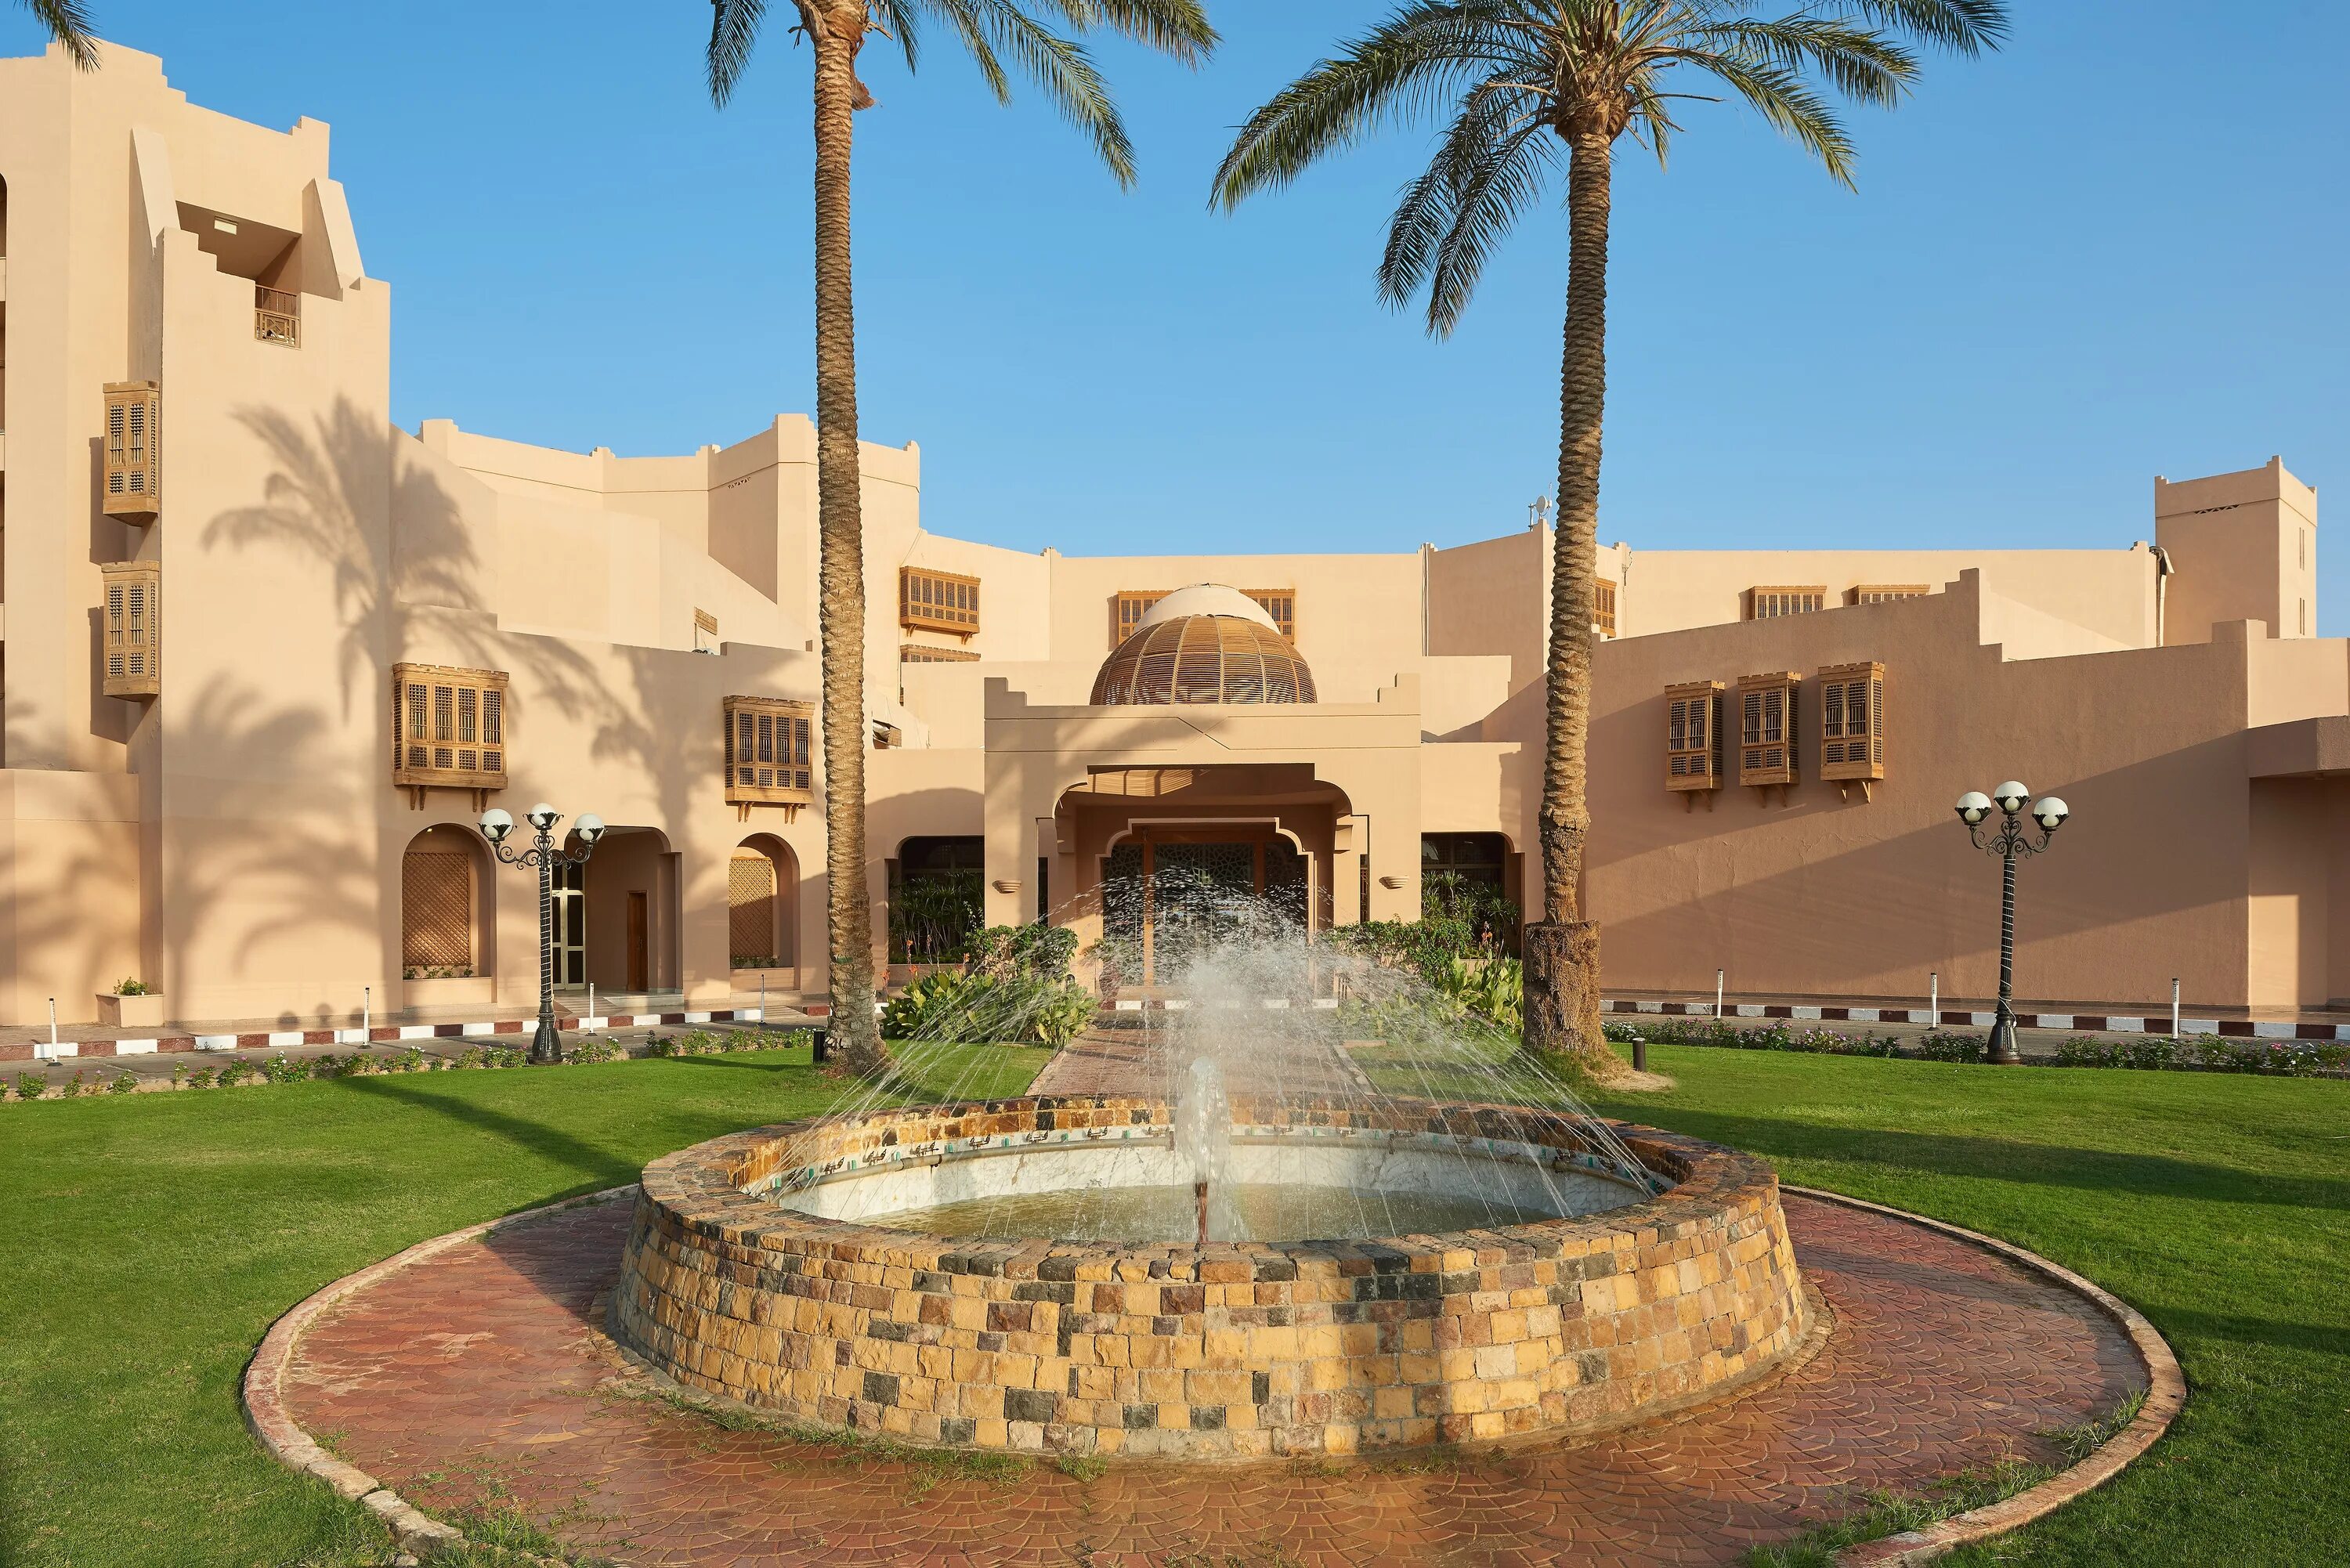 Continental hurghada. Отель Континенталь Египет Хургада. Continental Hotel Hurghada 5 Хургада. Континенталь отель Хургада 5. Отель Мовенпик Хургада 5 звезд.